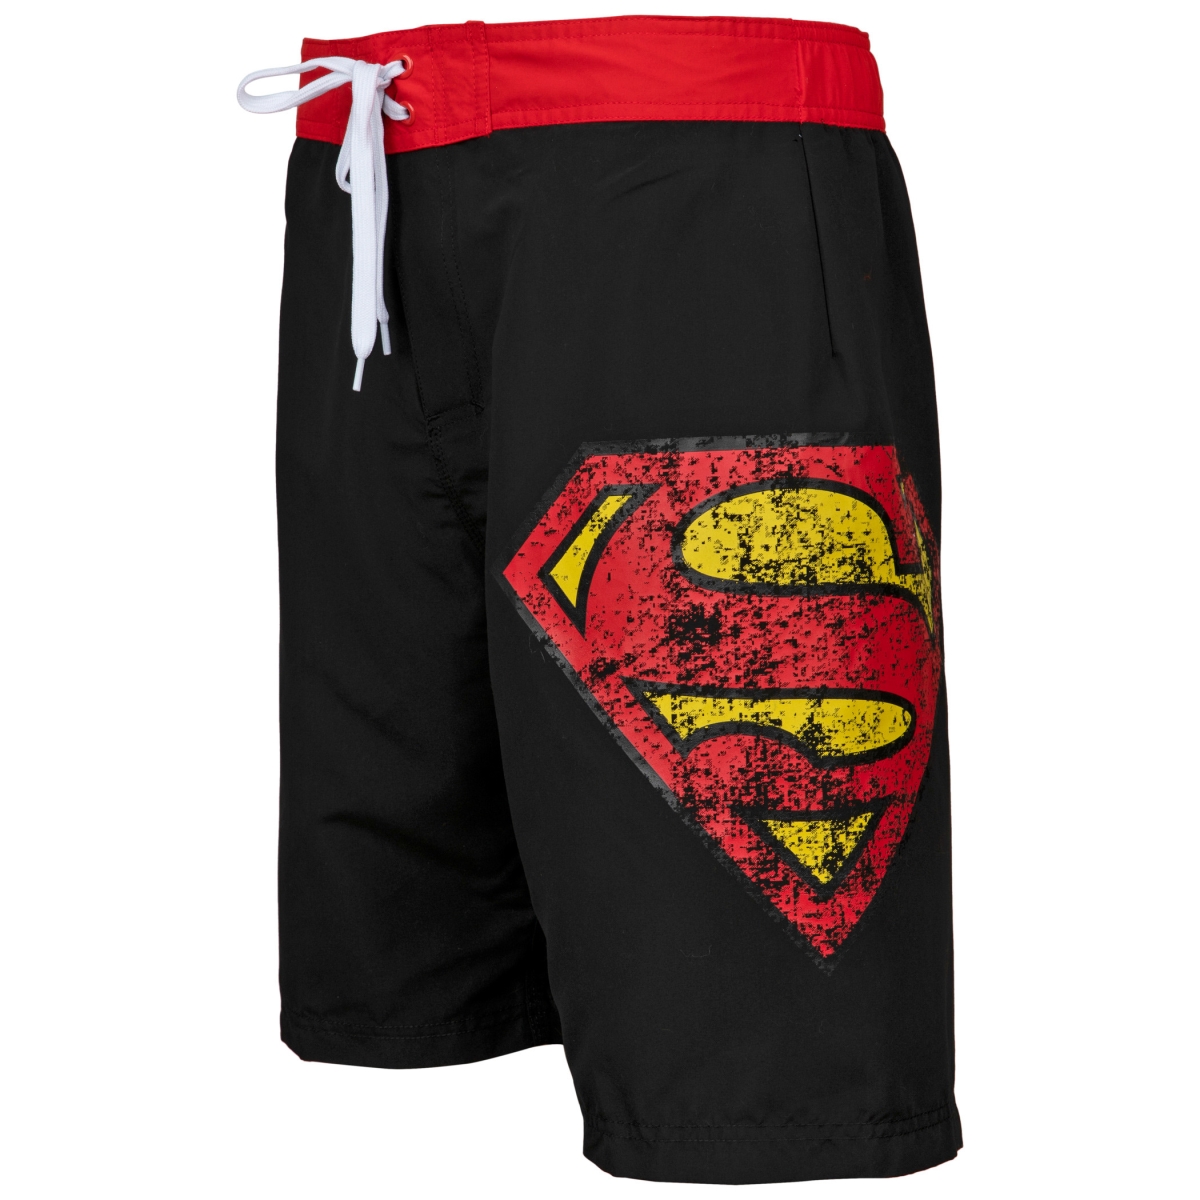 Picture of Superman 803465-xxlarge 44-46 Superman Symbol Swim Board Shorts, Black - 2XL 44-46